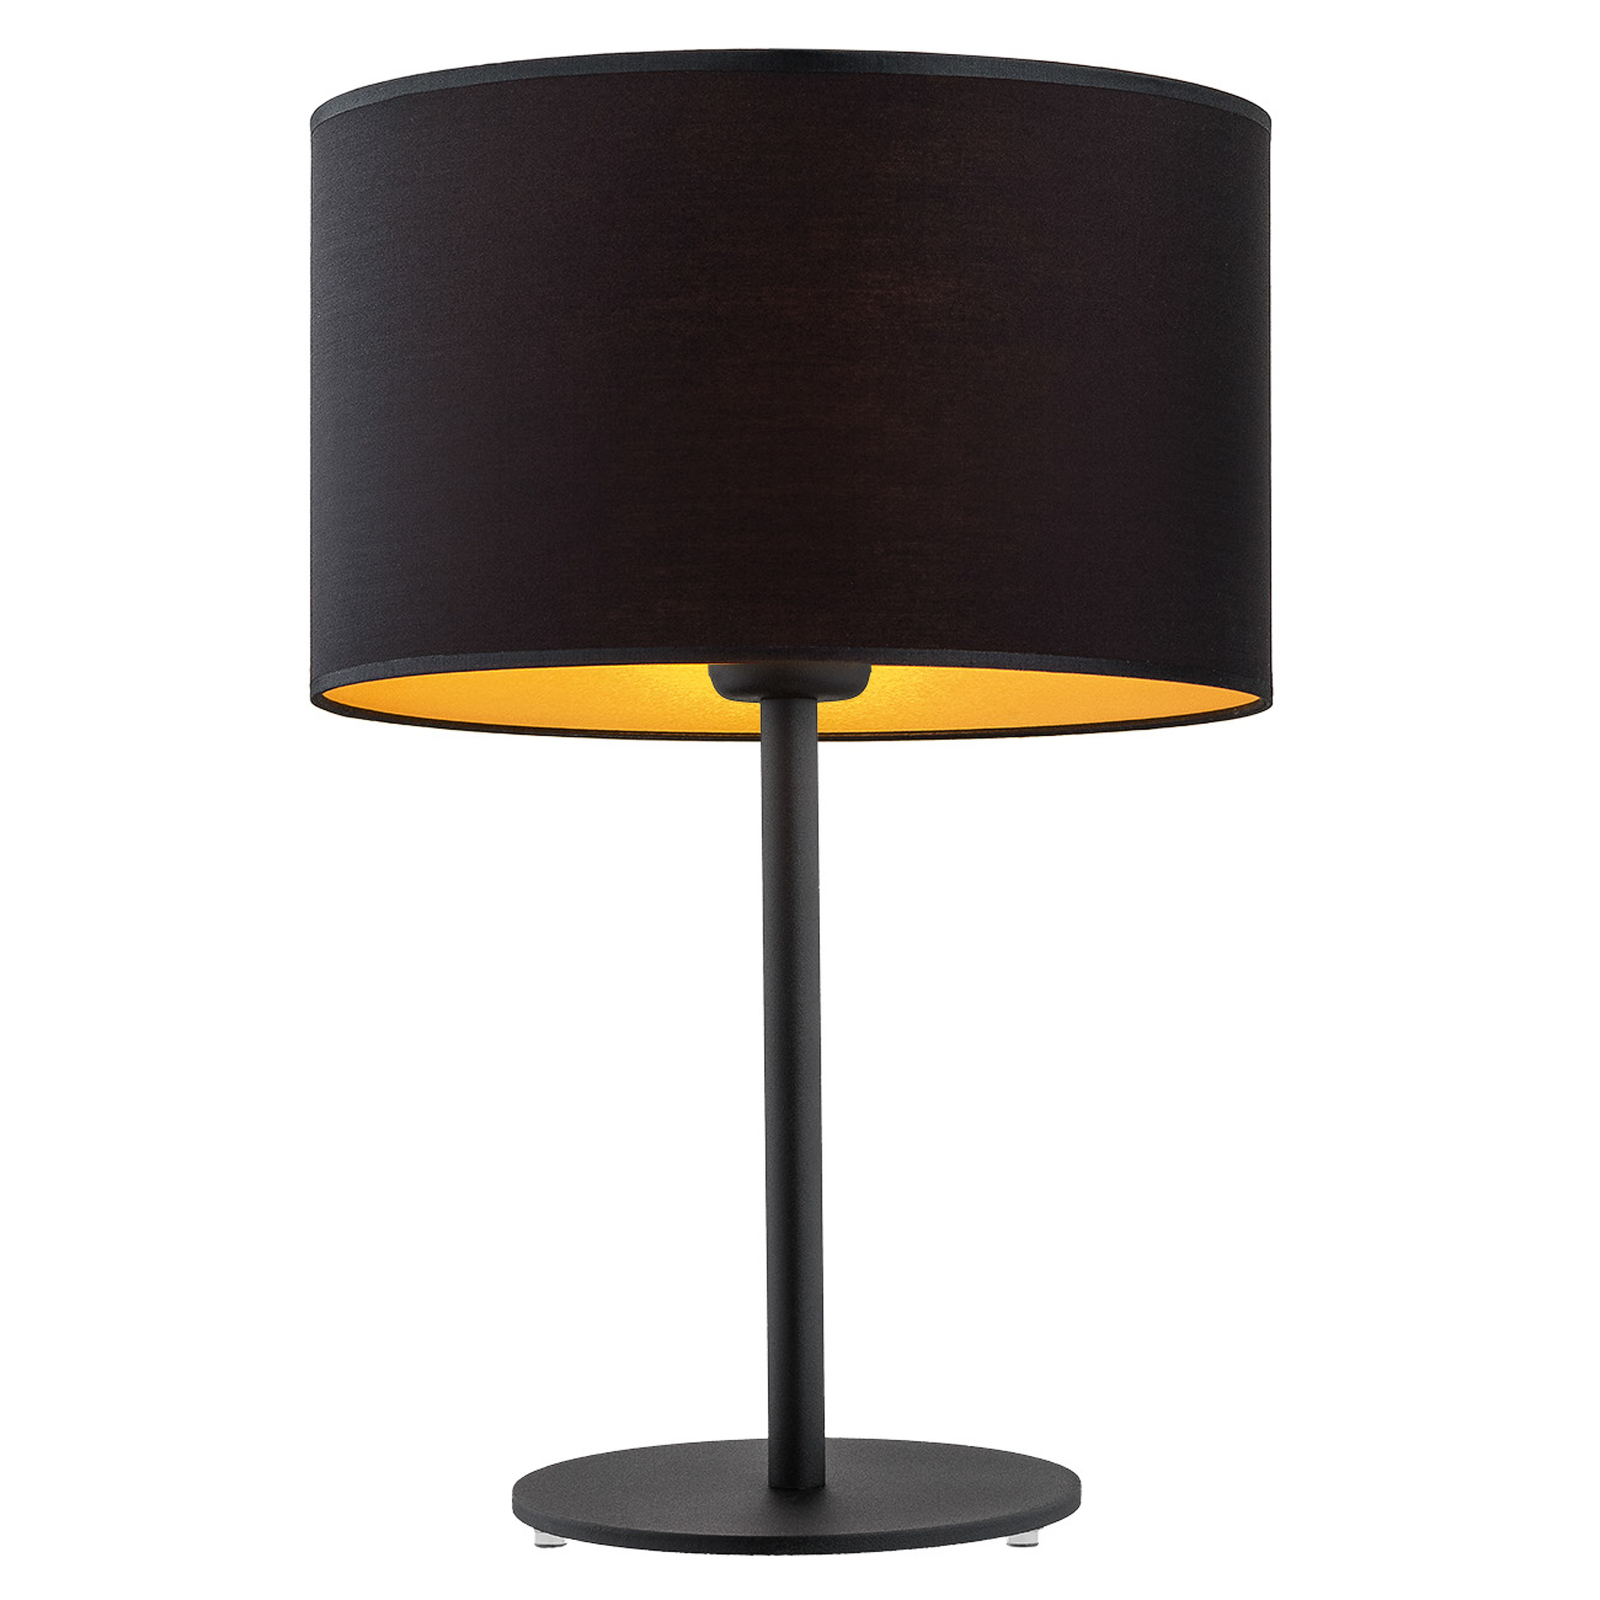 Lobera table lamp, all in black